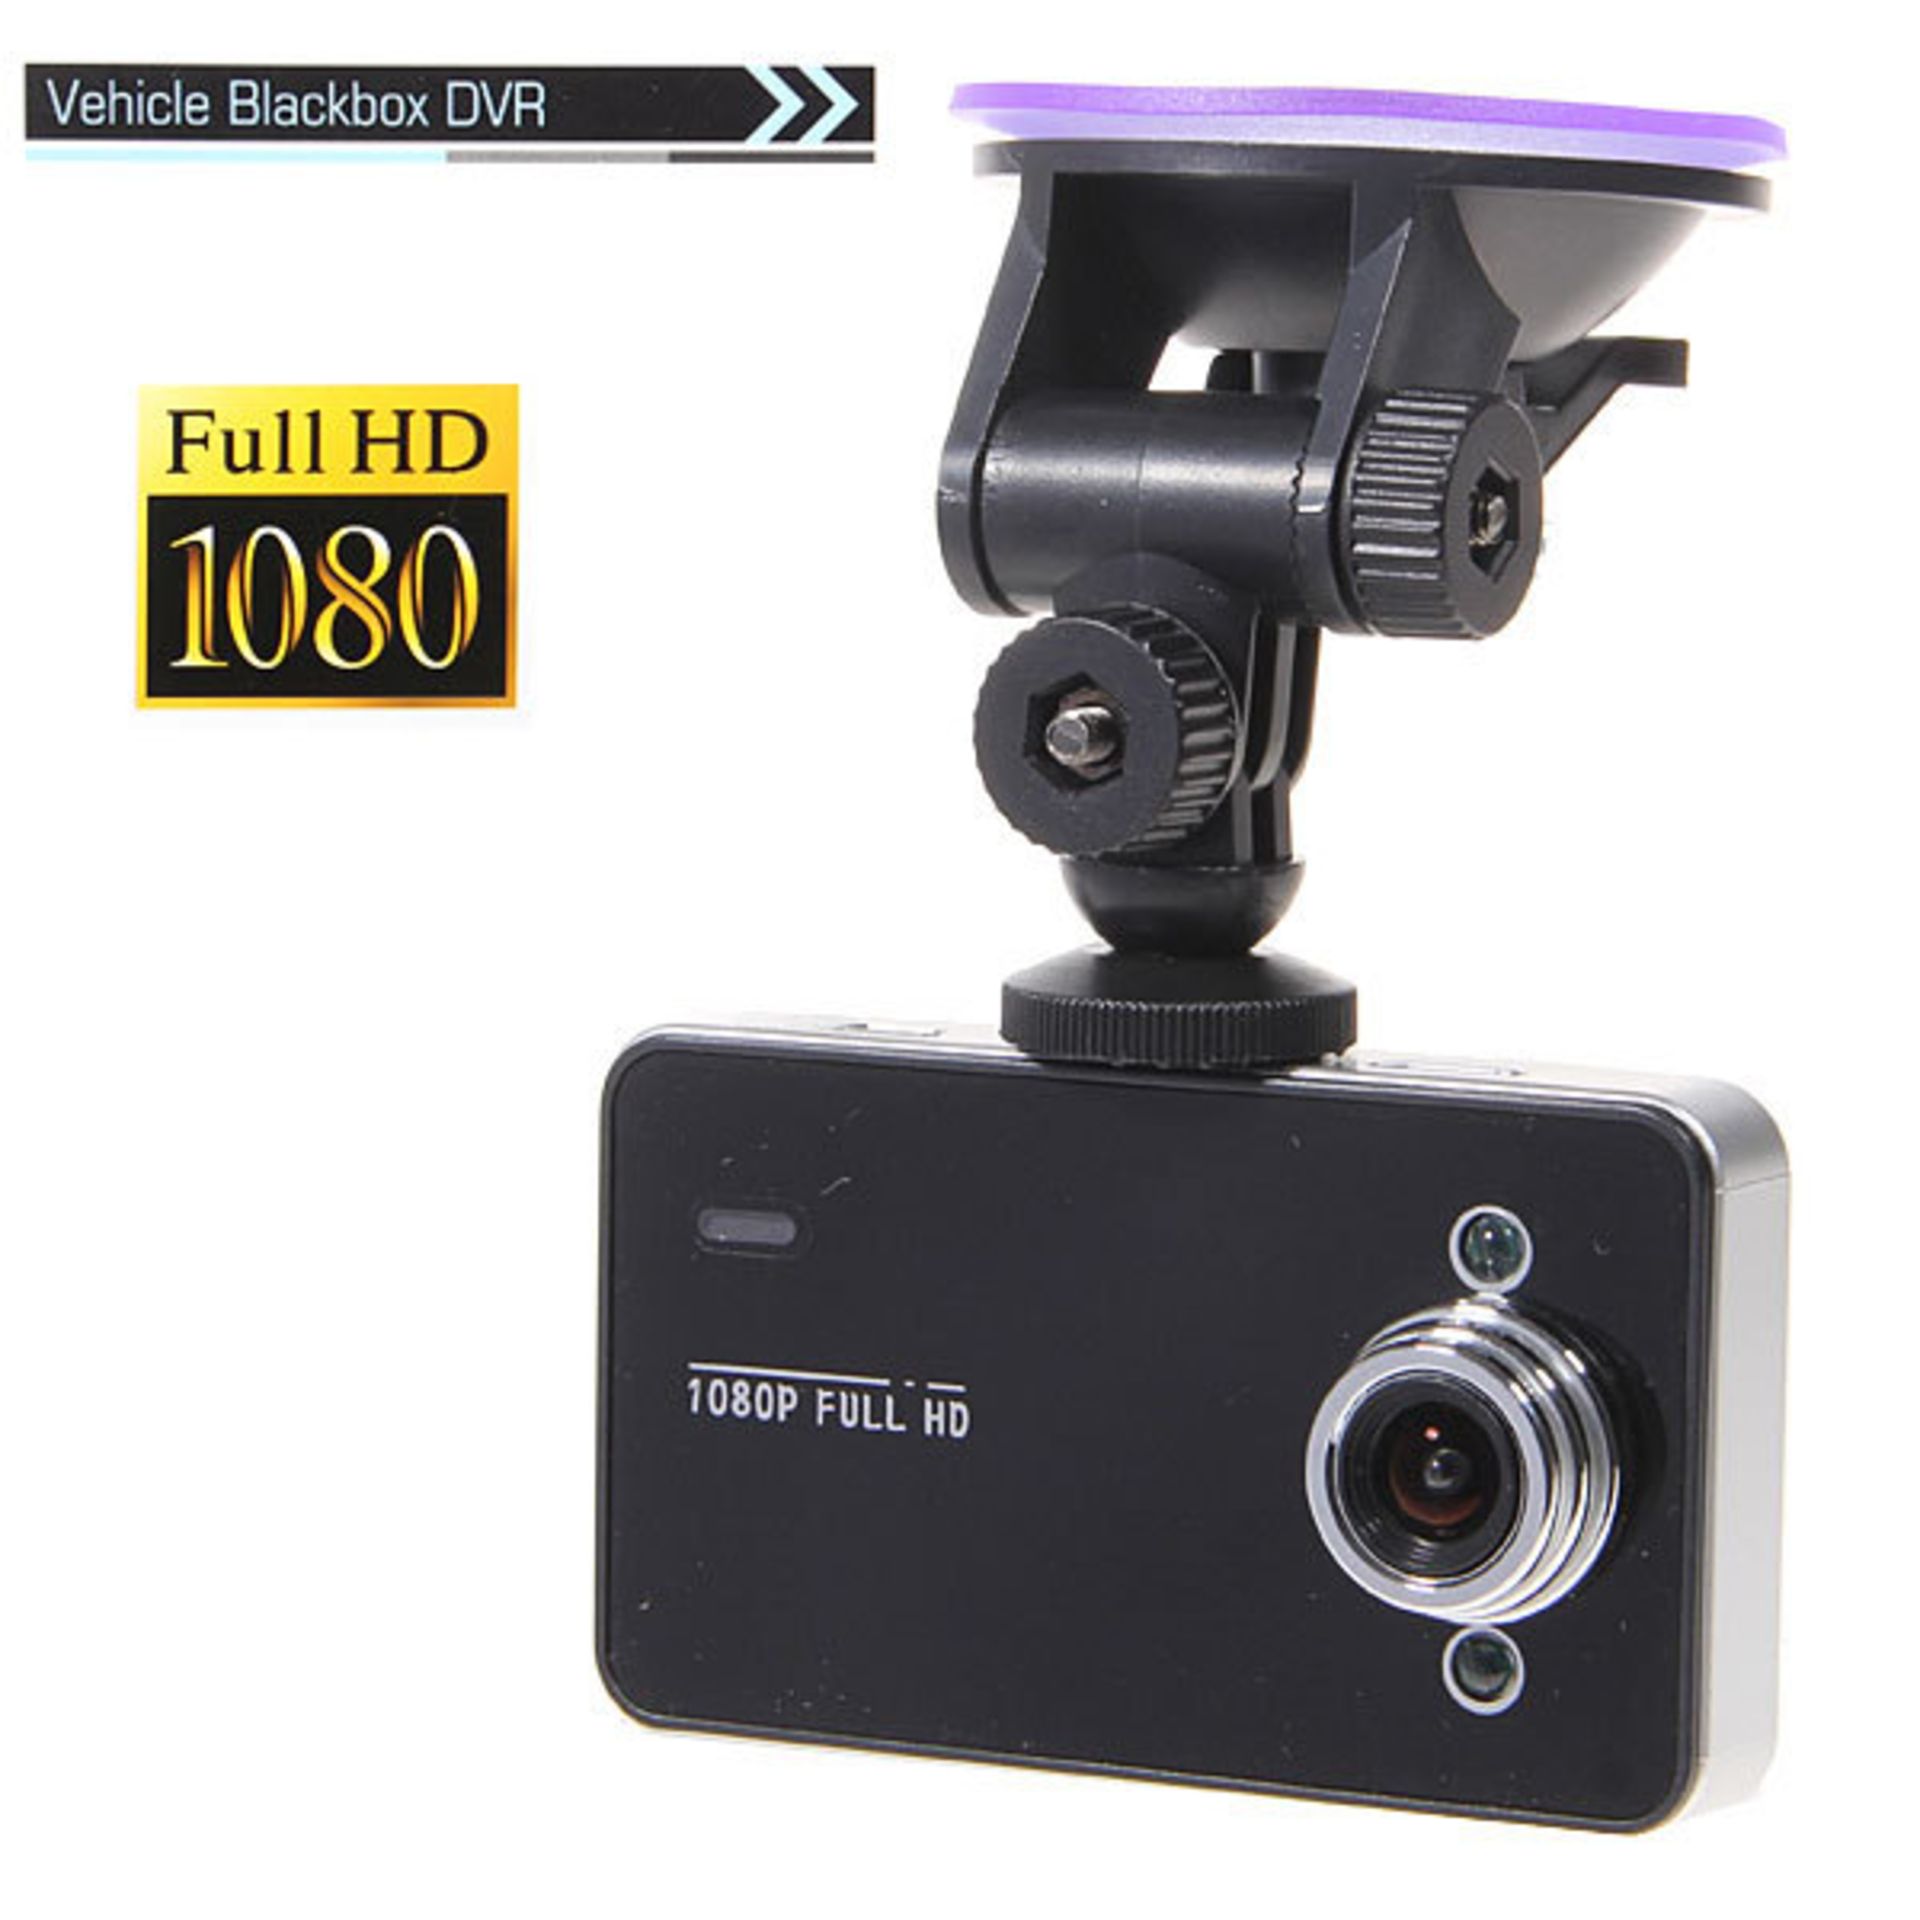 V *TRADE QTY* Brand New Car Camera Blackbox DVR With Motion Detecting HD/DVR 1080p X 15 YOUR BID